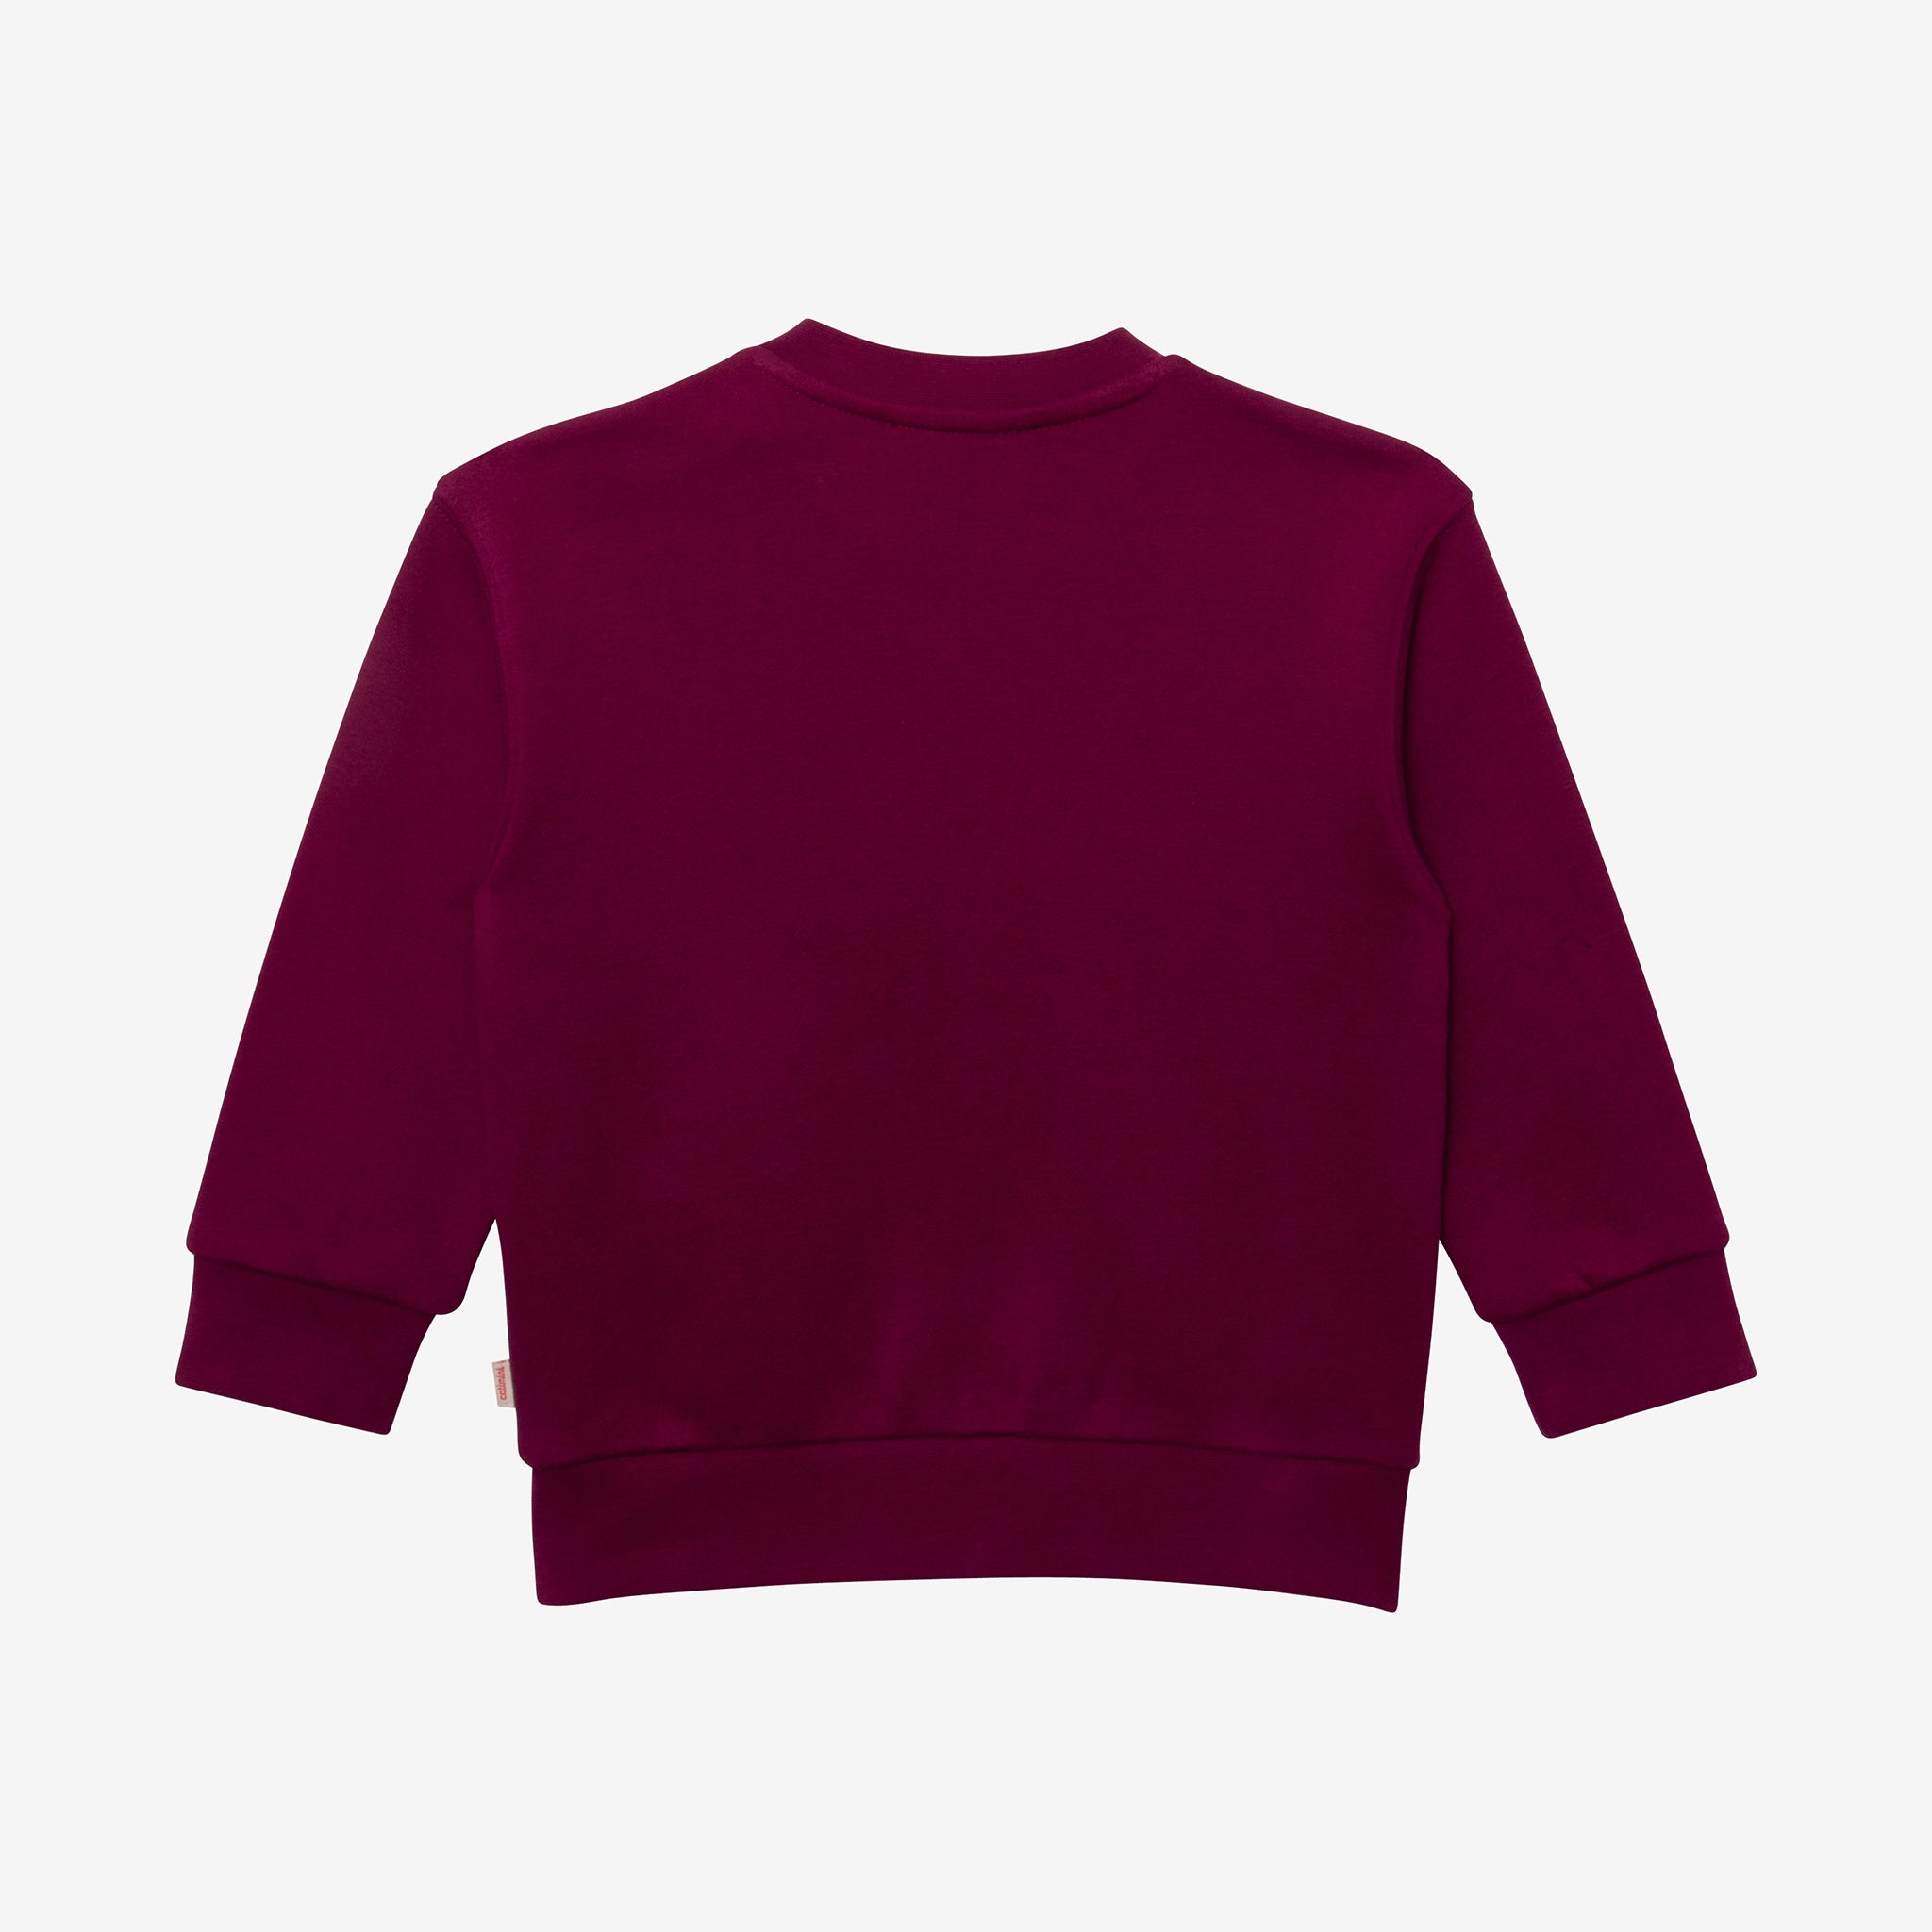 Toddler boys\' purple sweatshirt | USA Catimini